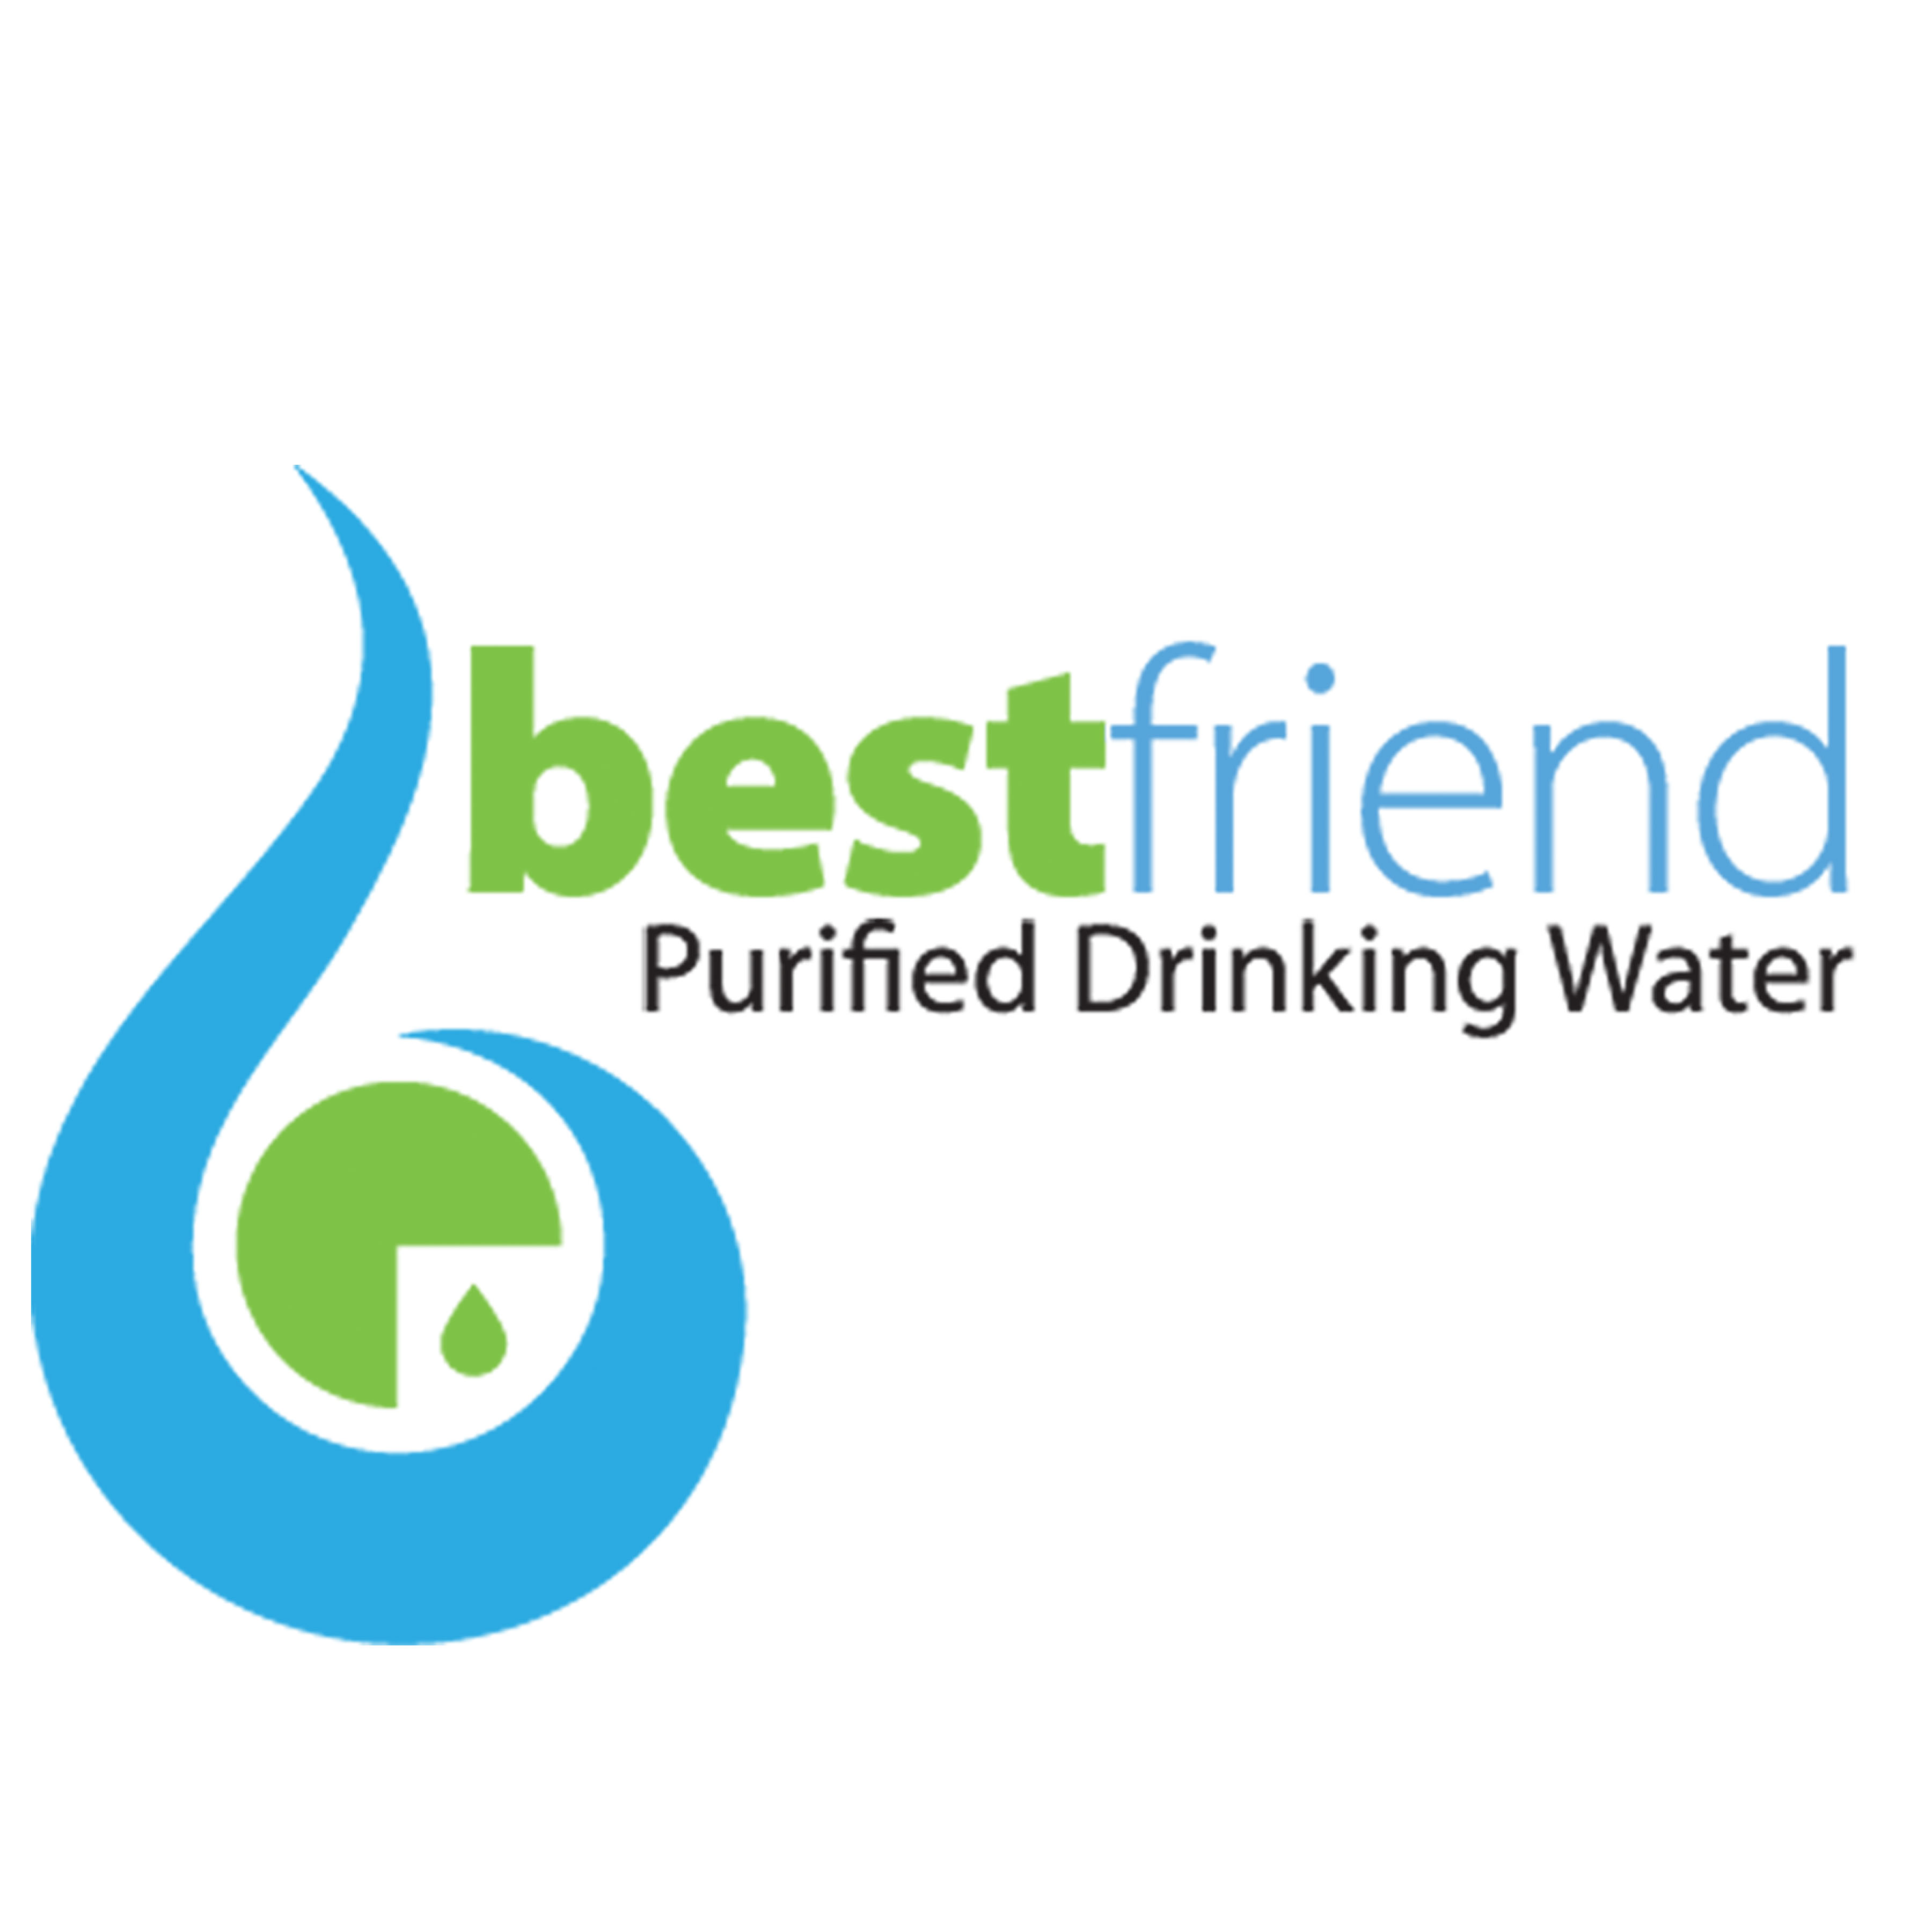 Best Friend Purified Drinking Water Factory